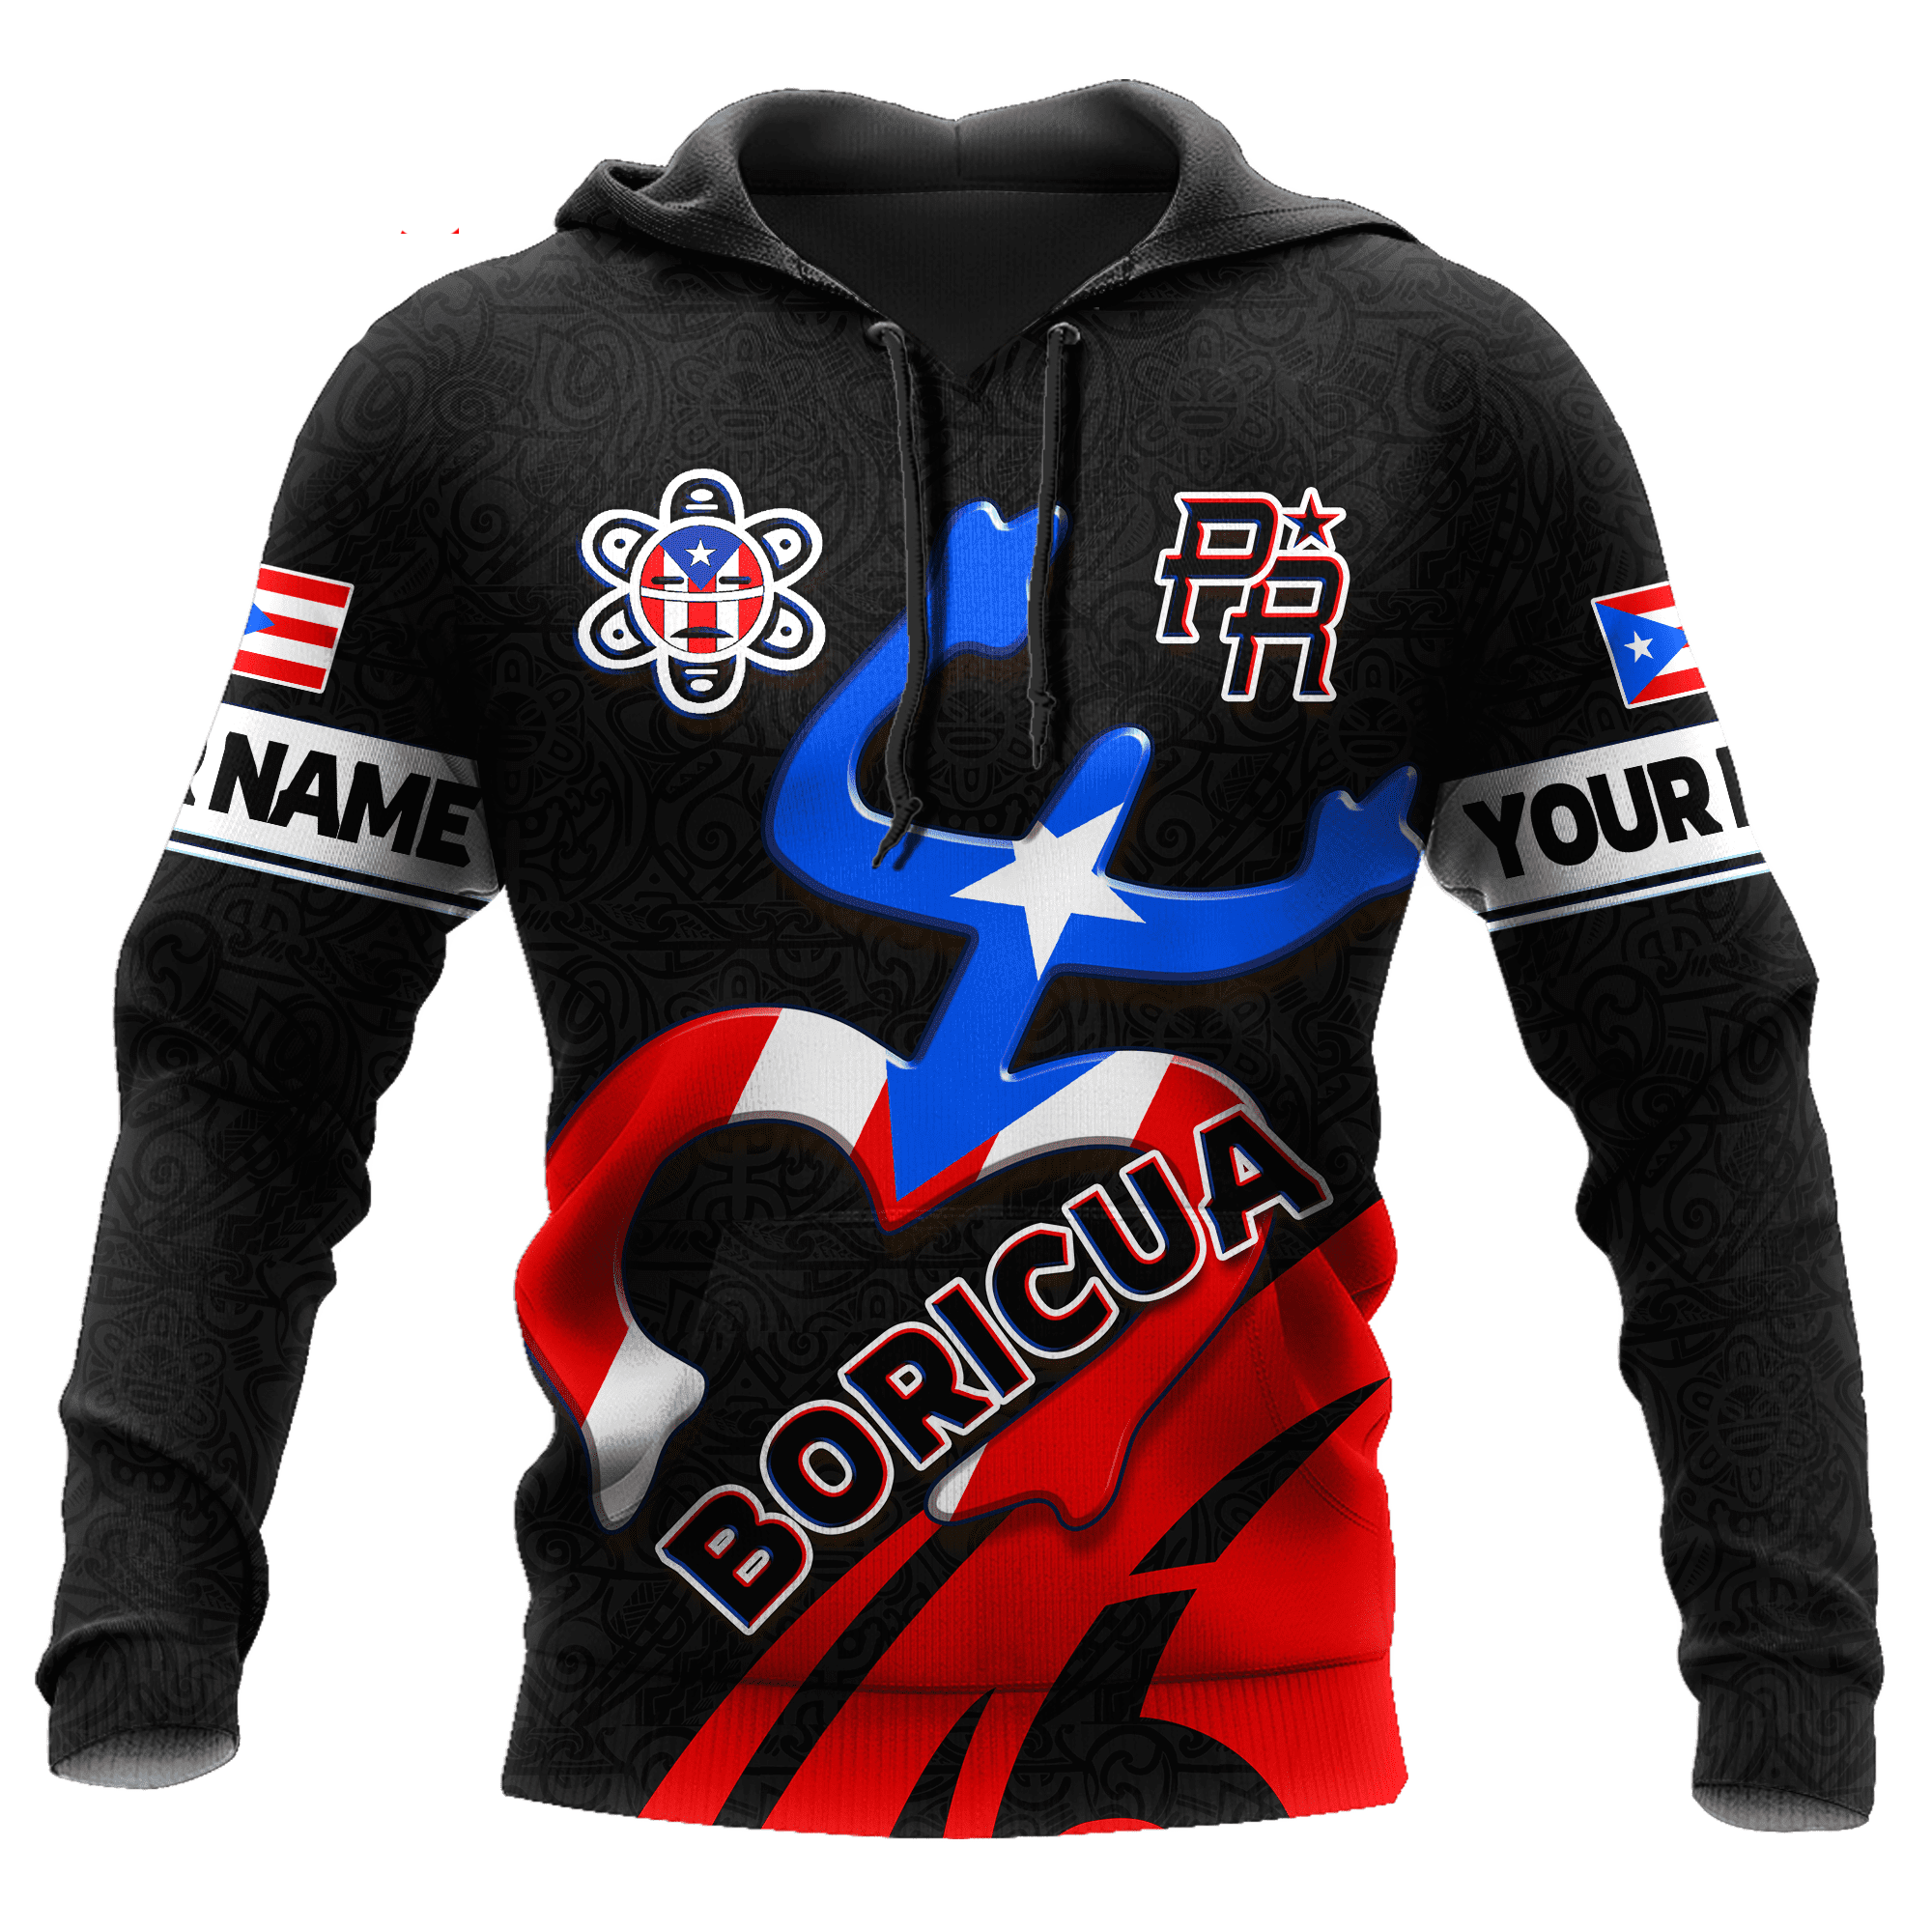 Personalized Custom Name Puerto Rico Boricua Coqui 3D Full Printed Hoodie Shirts